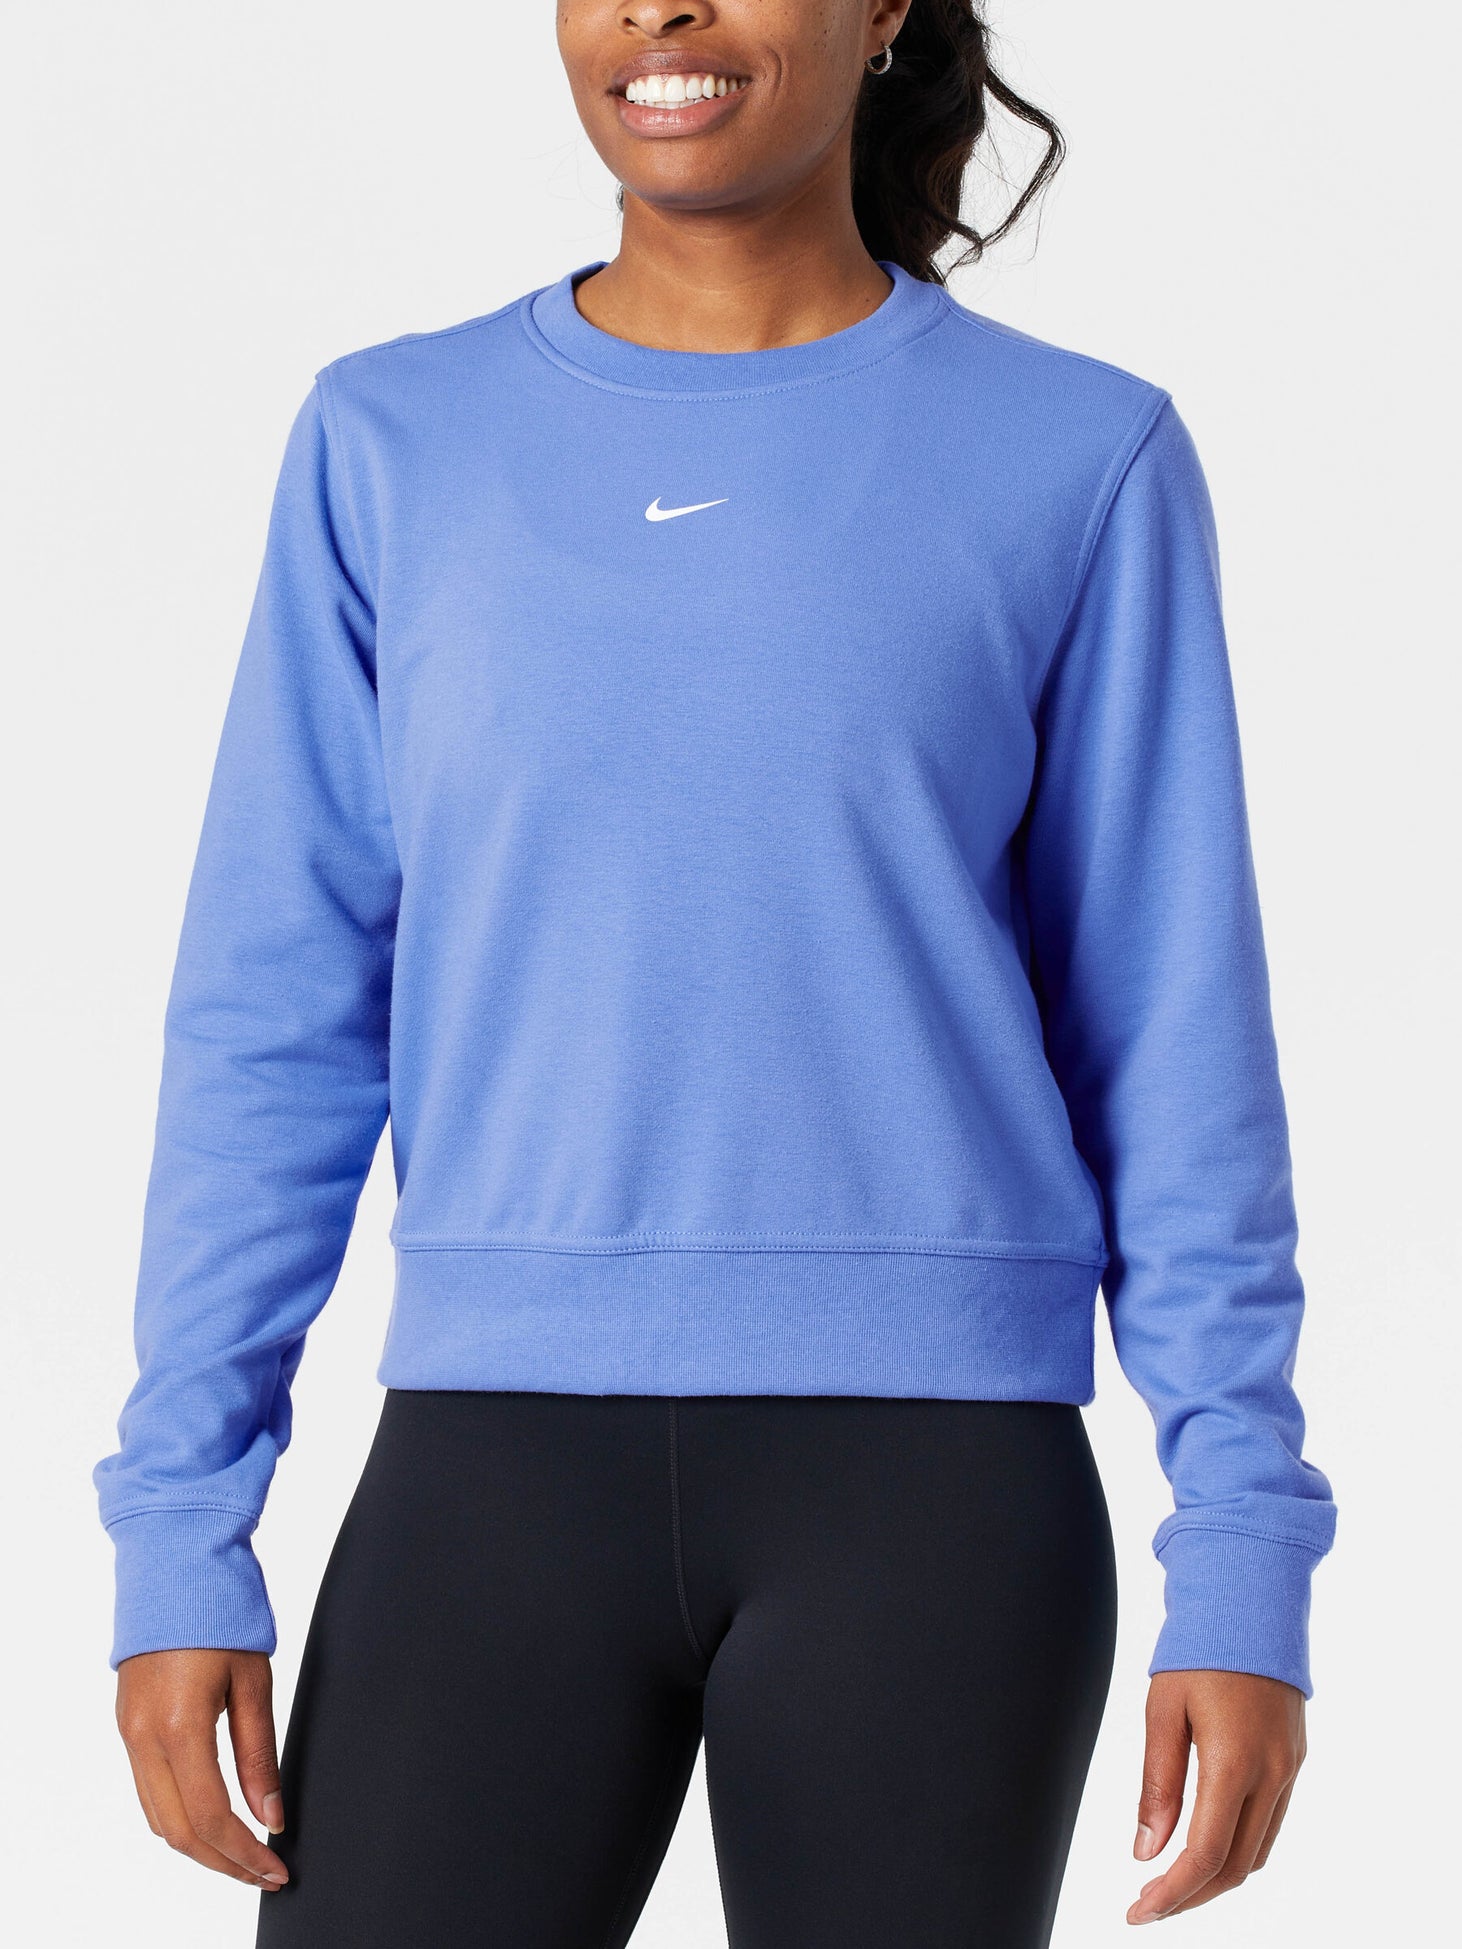 Nike Women's Winter One Crew Long Sleeve | Tennis Warehouse